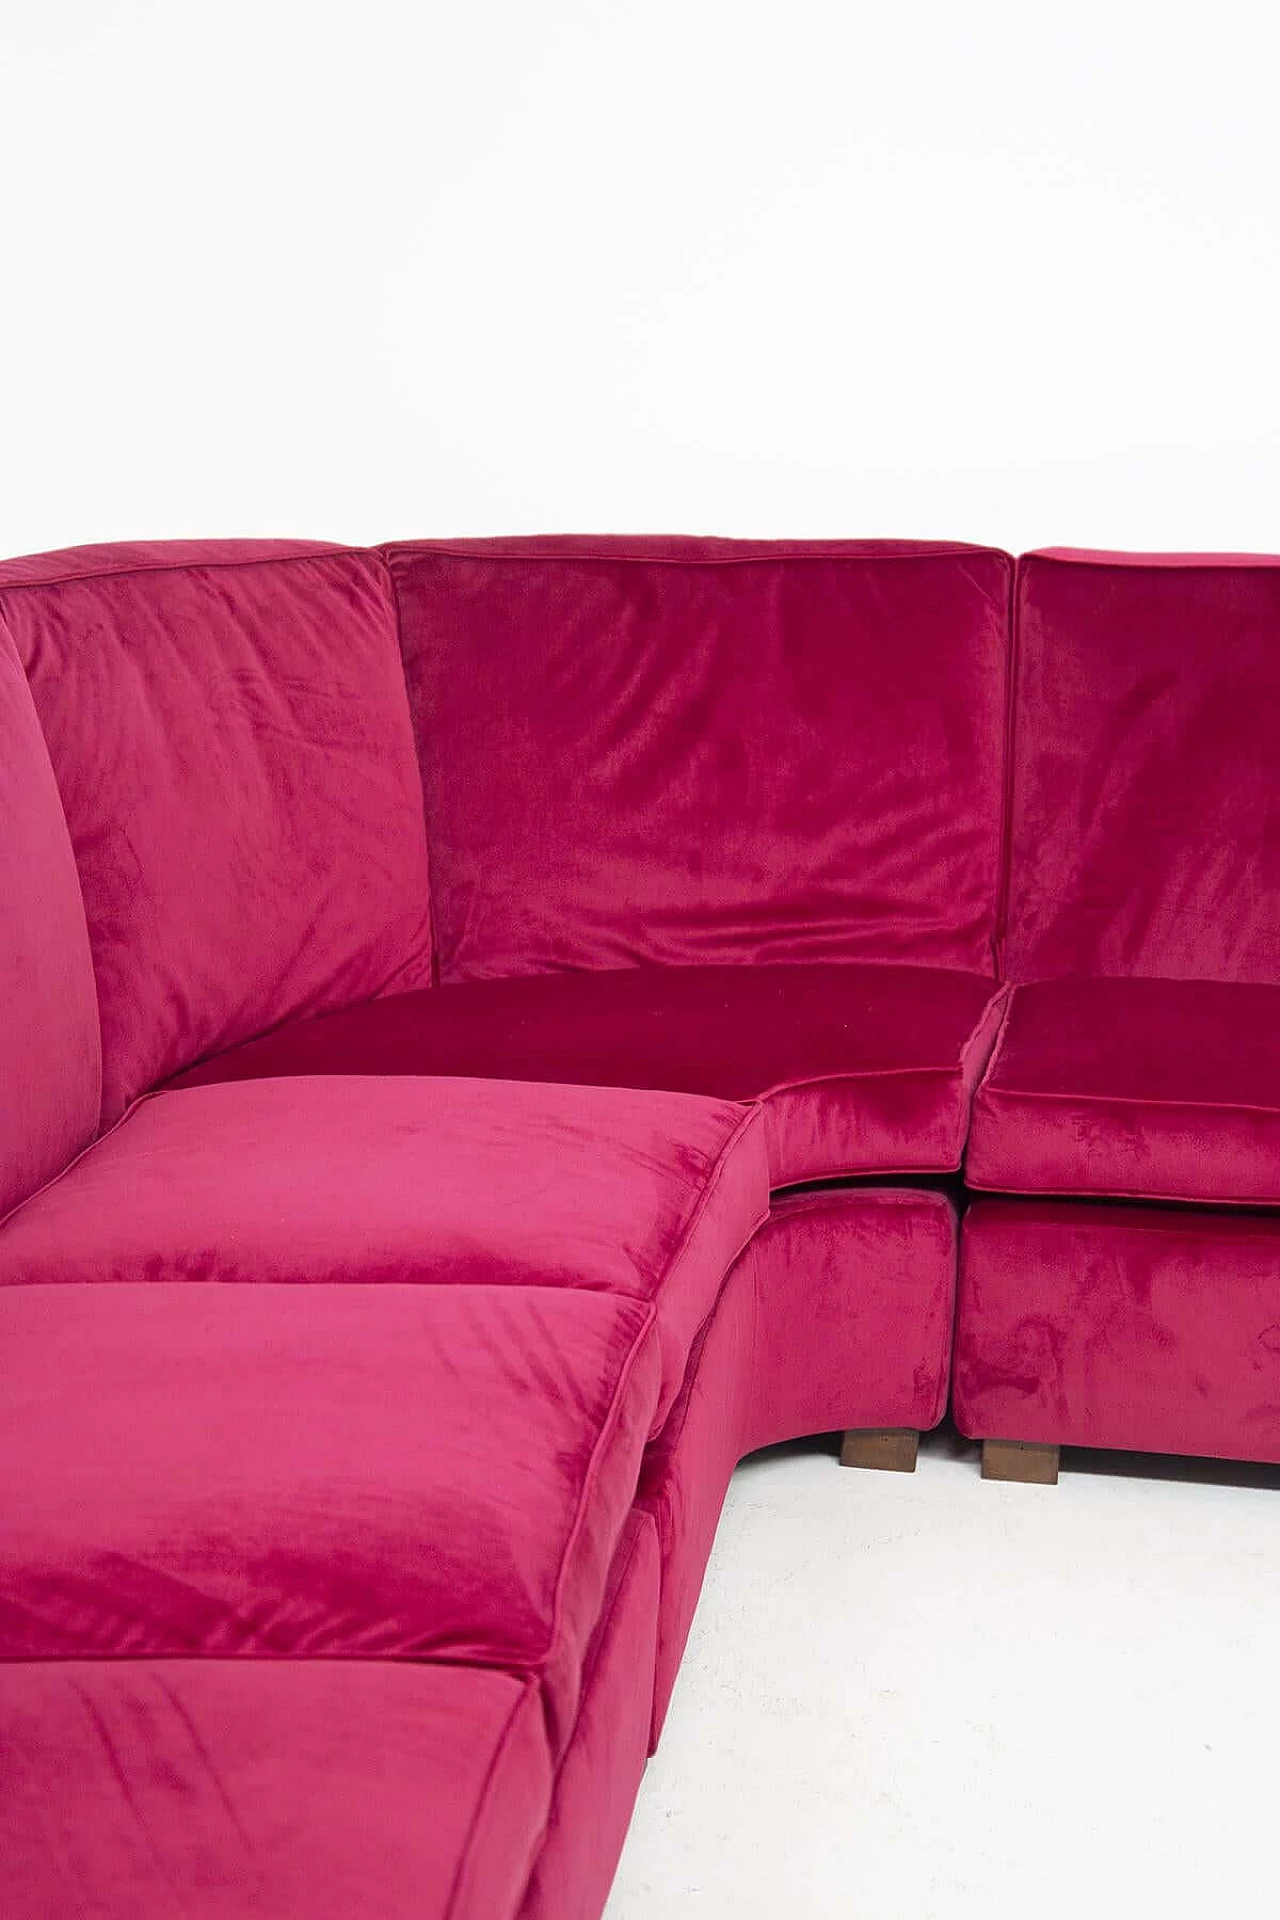 12-seater modular sofa attr. to Luigi Caccia Dominioni in dark fuchsia velvet, 1960s 1403104